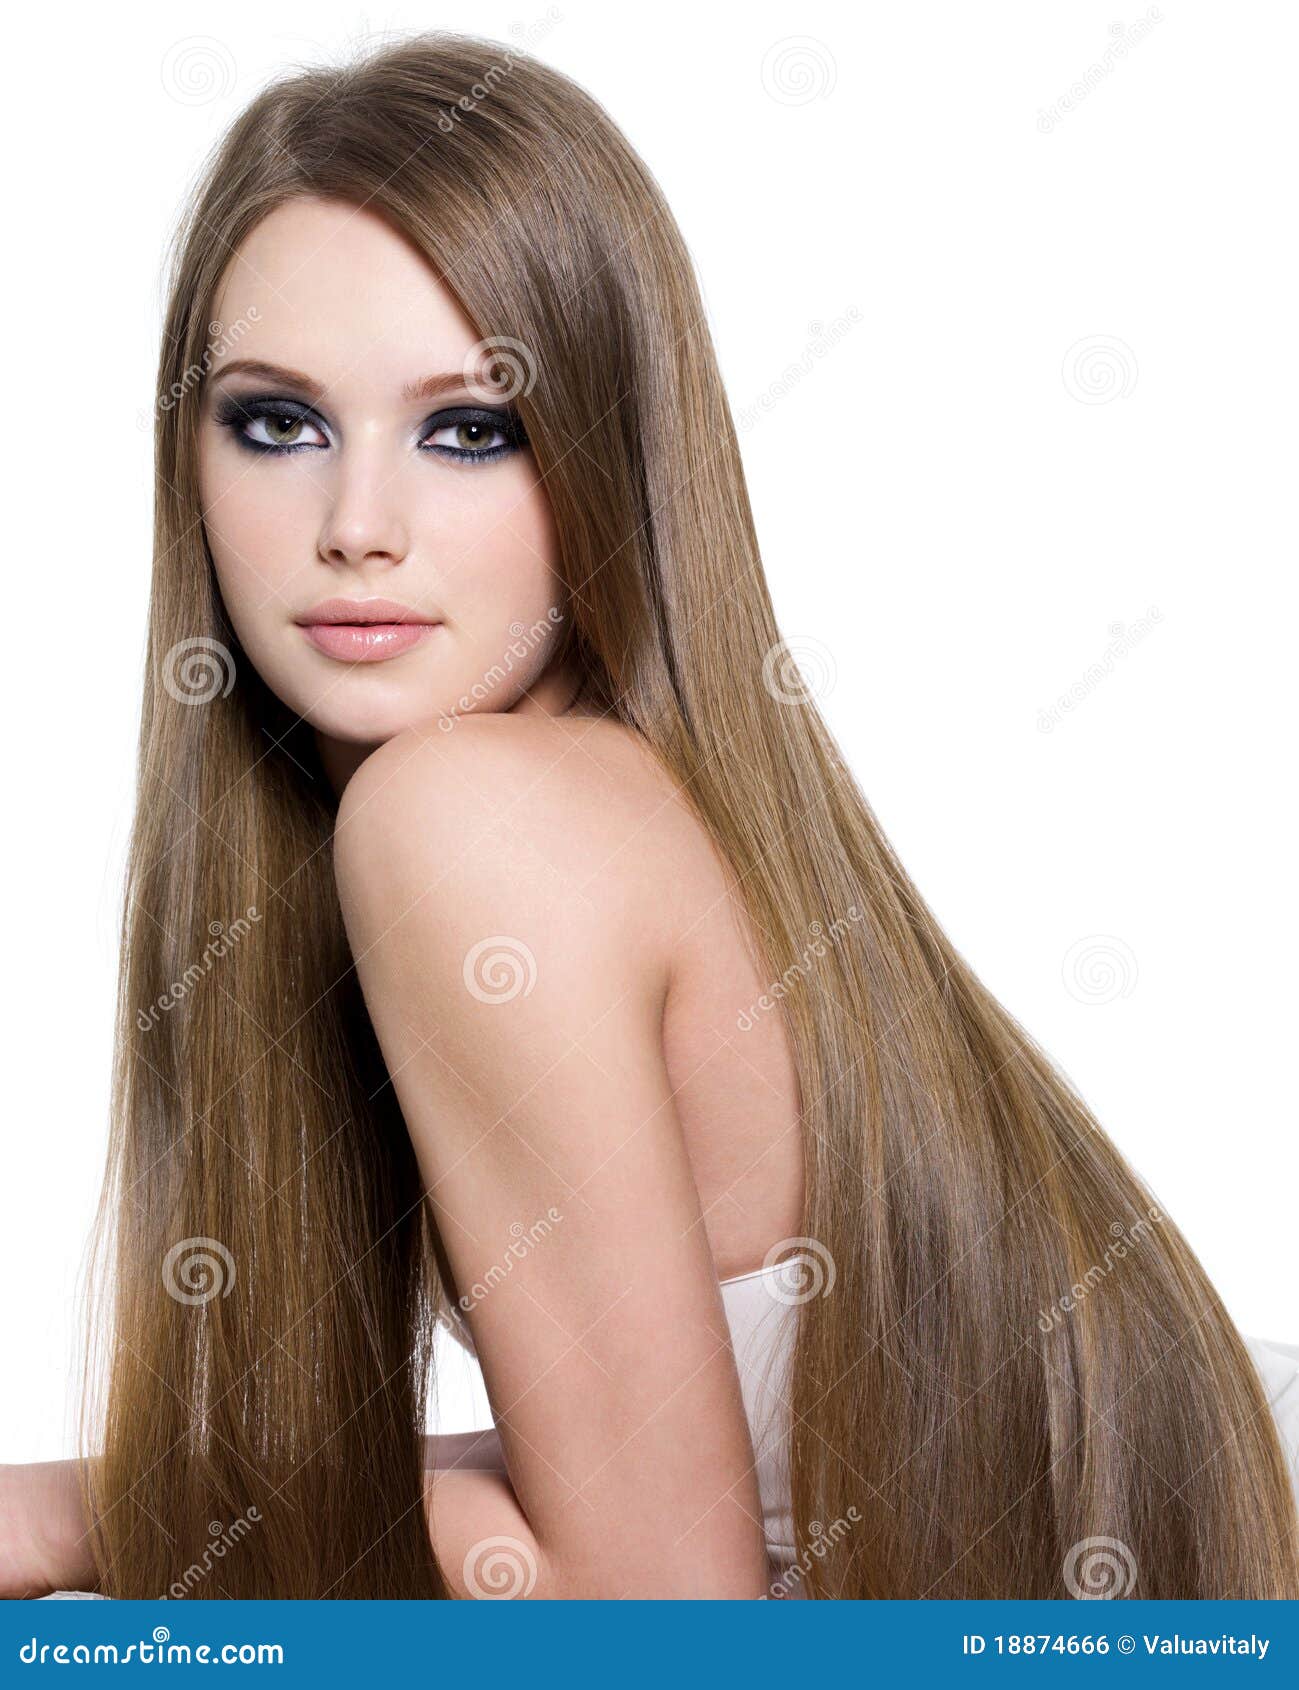 Cute Baby Girl Very Long Hair Stock Photo 1222499770 | Shutterstock